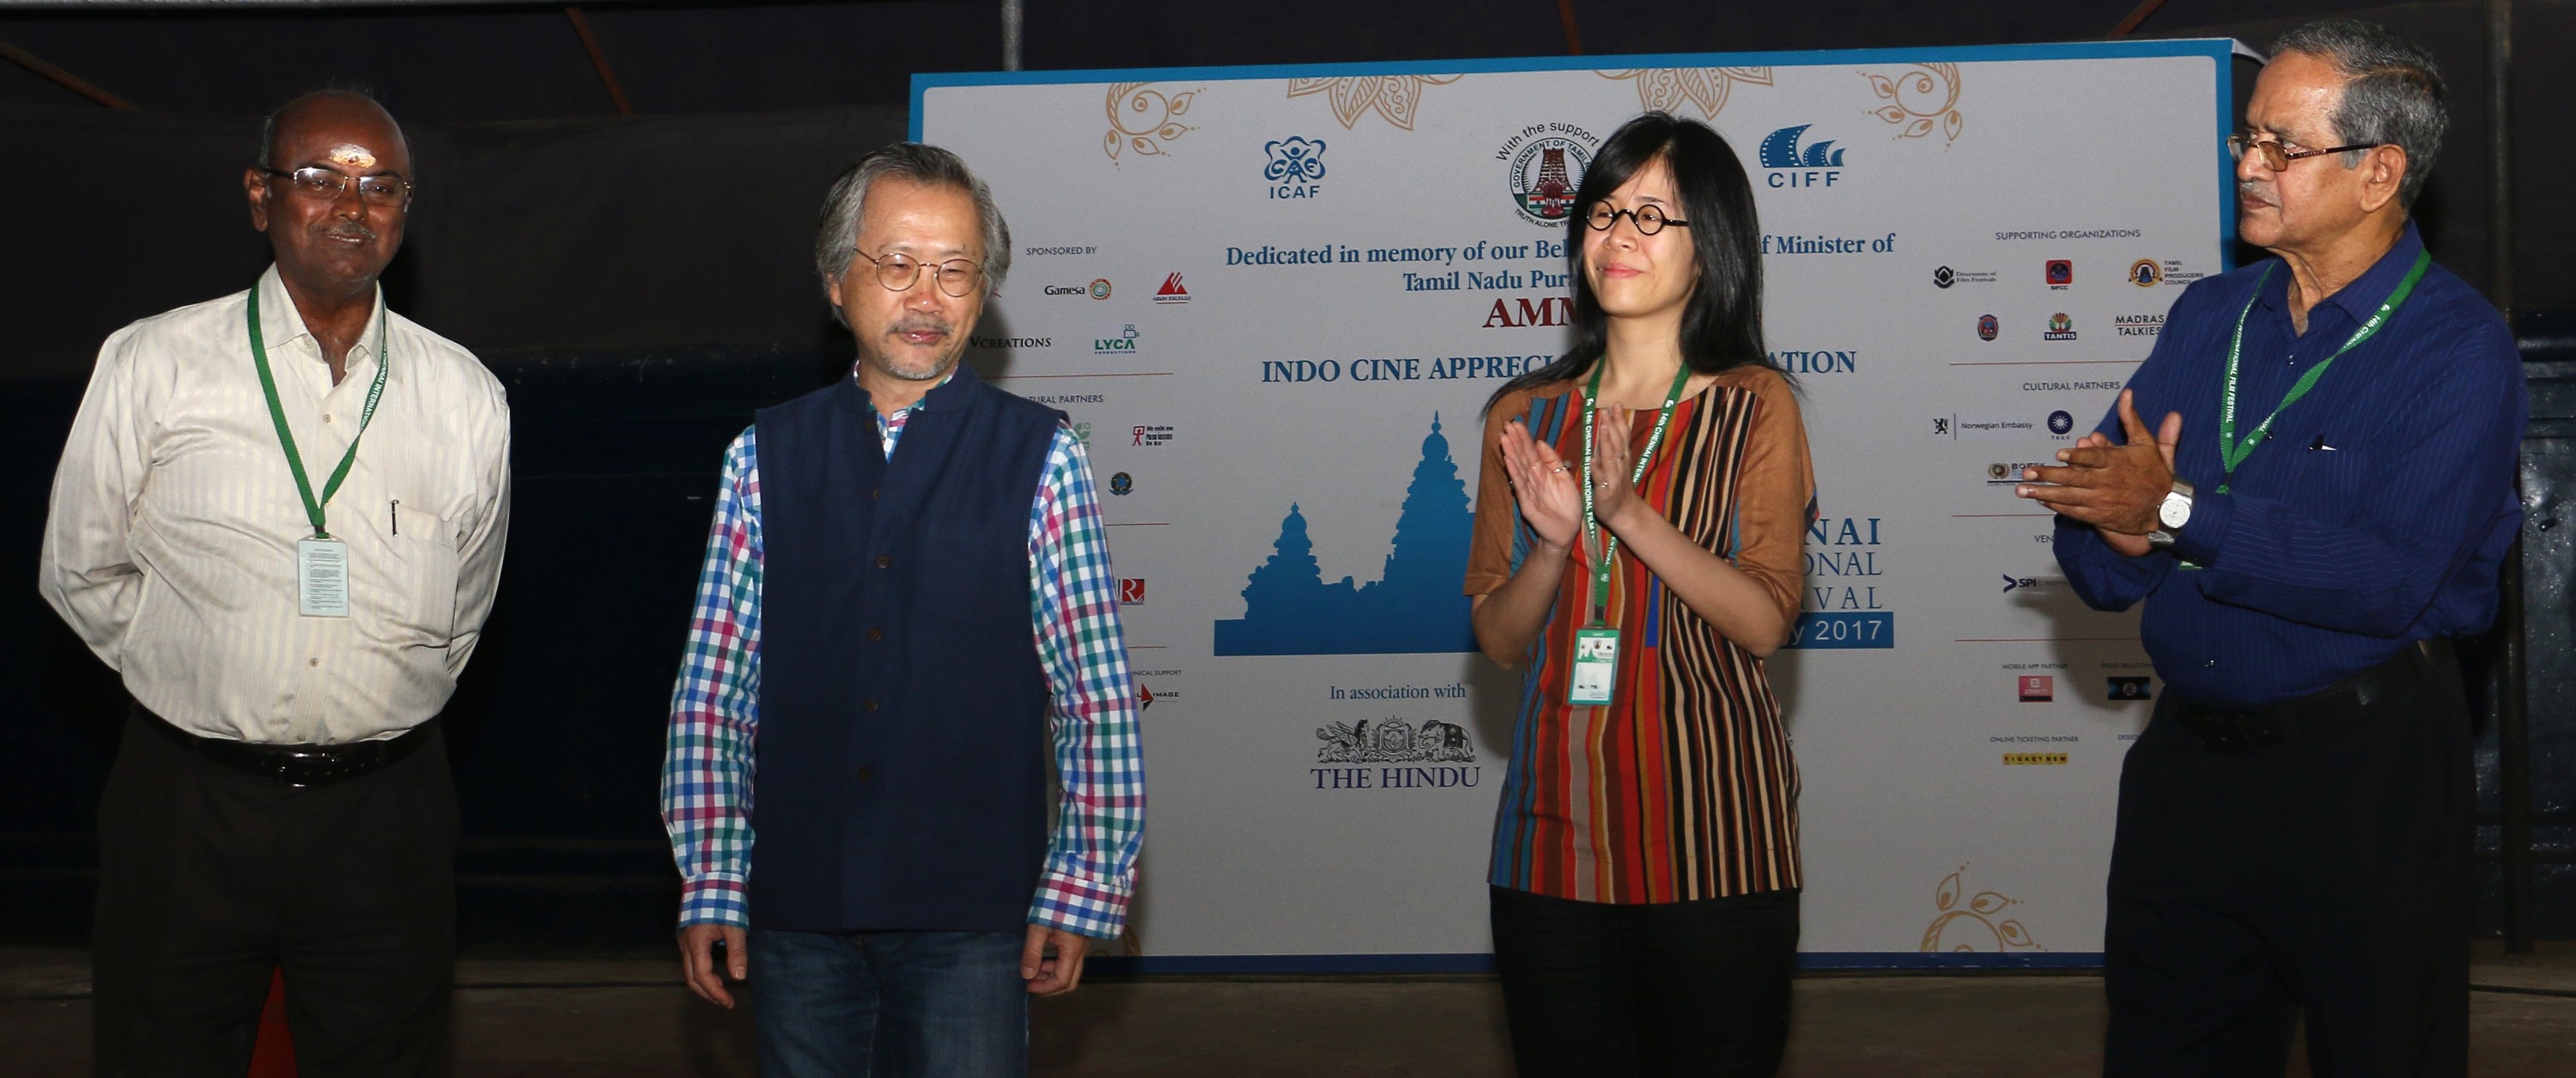 Asian Film Awards Academy Hong Kong Officials at 14th Chennai International Film Festival - Day 3 Event Stills  (5)